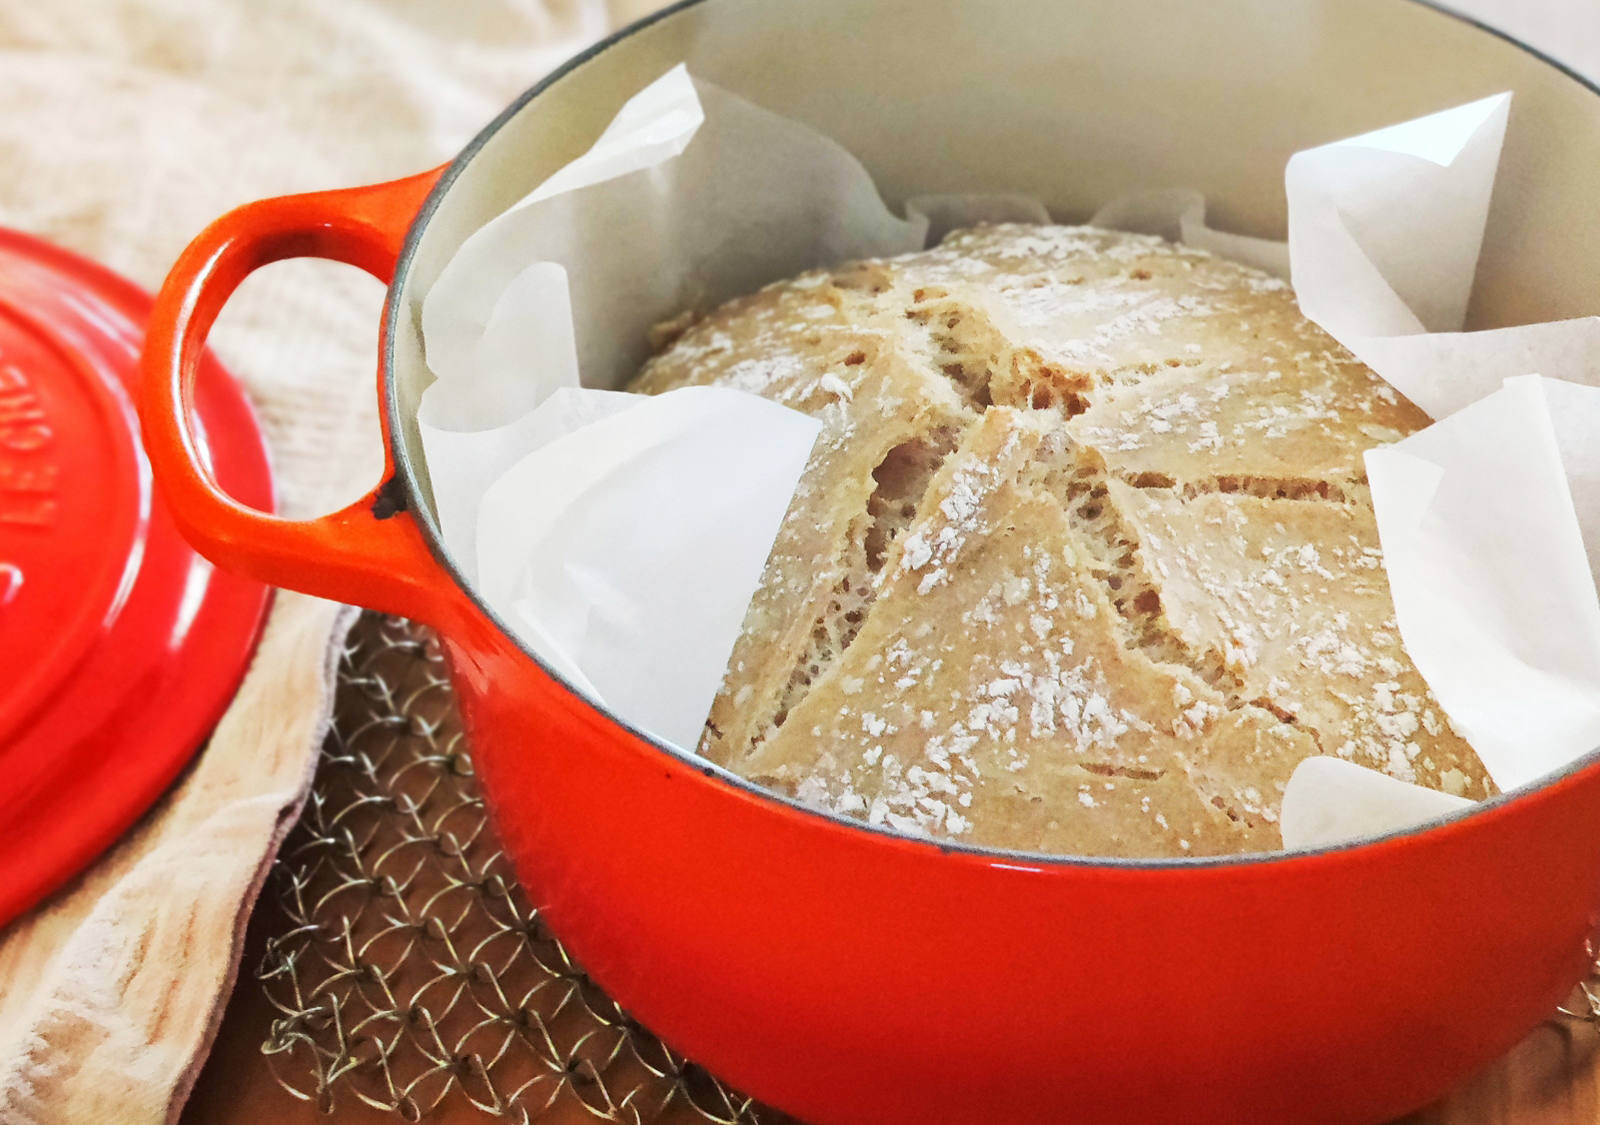 Bread in a pot: Bake the bread in a pot